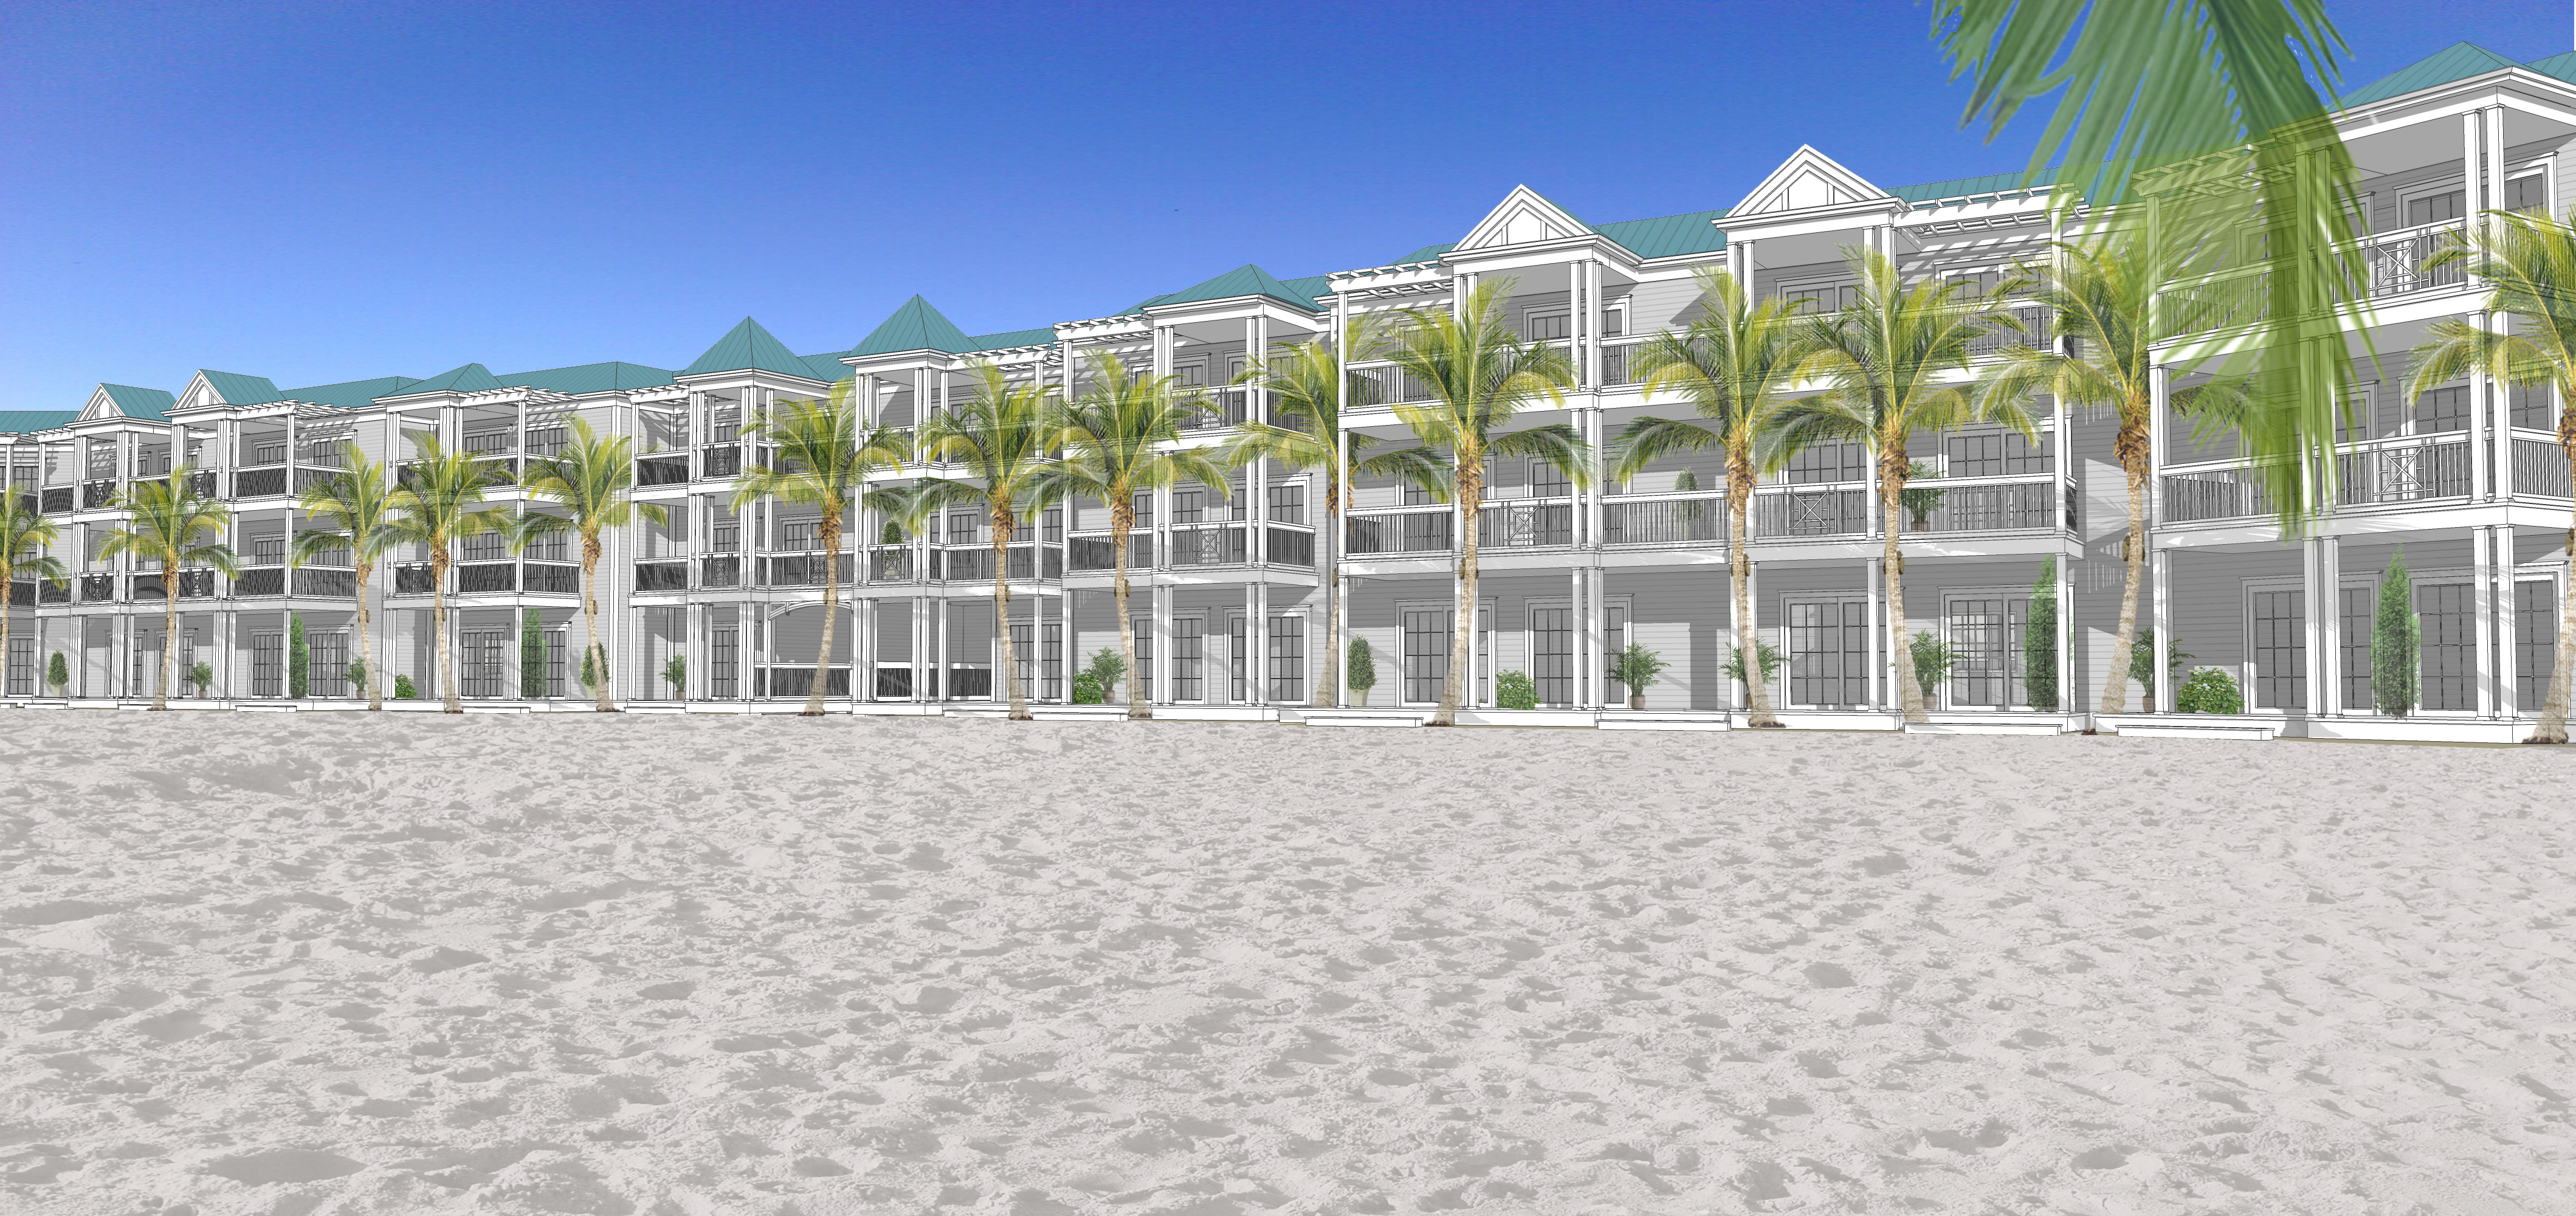 Florida Keys Isla Bella Beach Resort, New Luxury Hotel Opening 2019 - Luxe  Beat Magazine